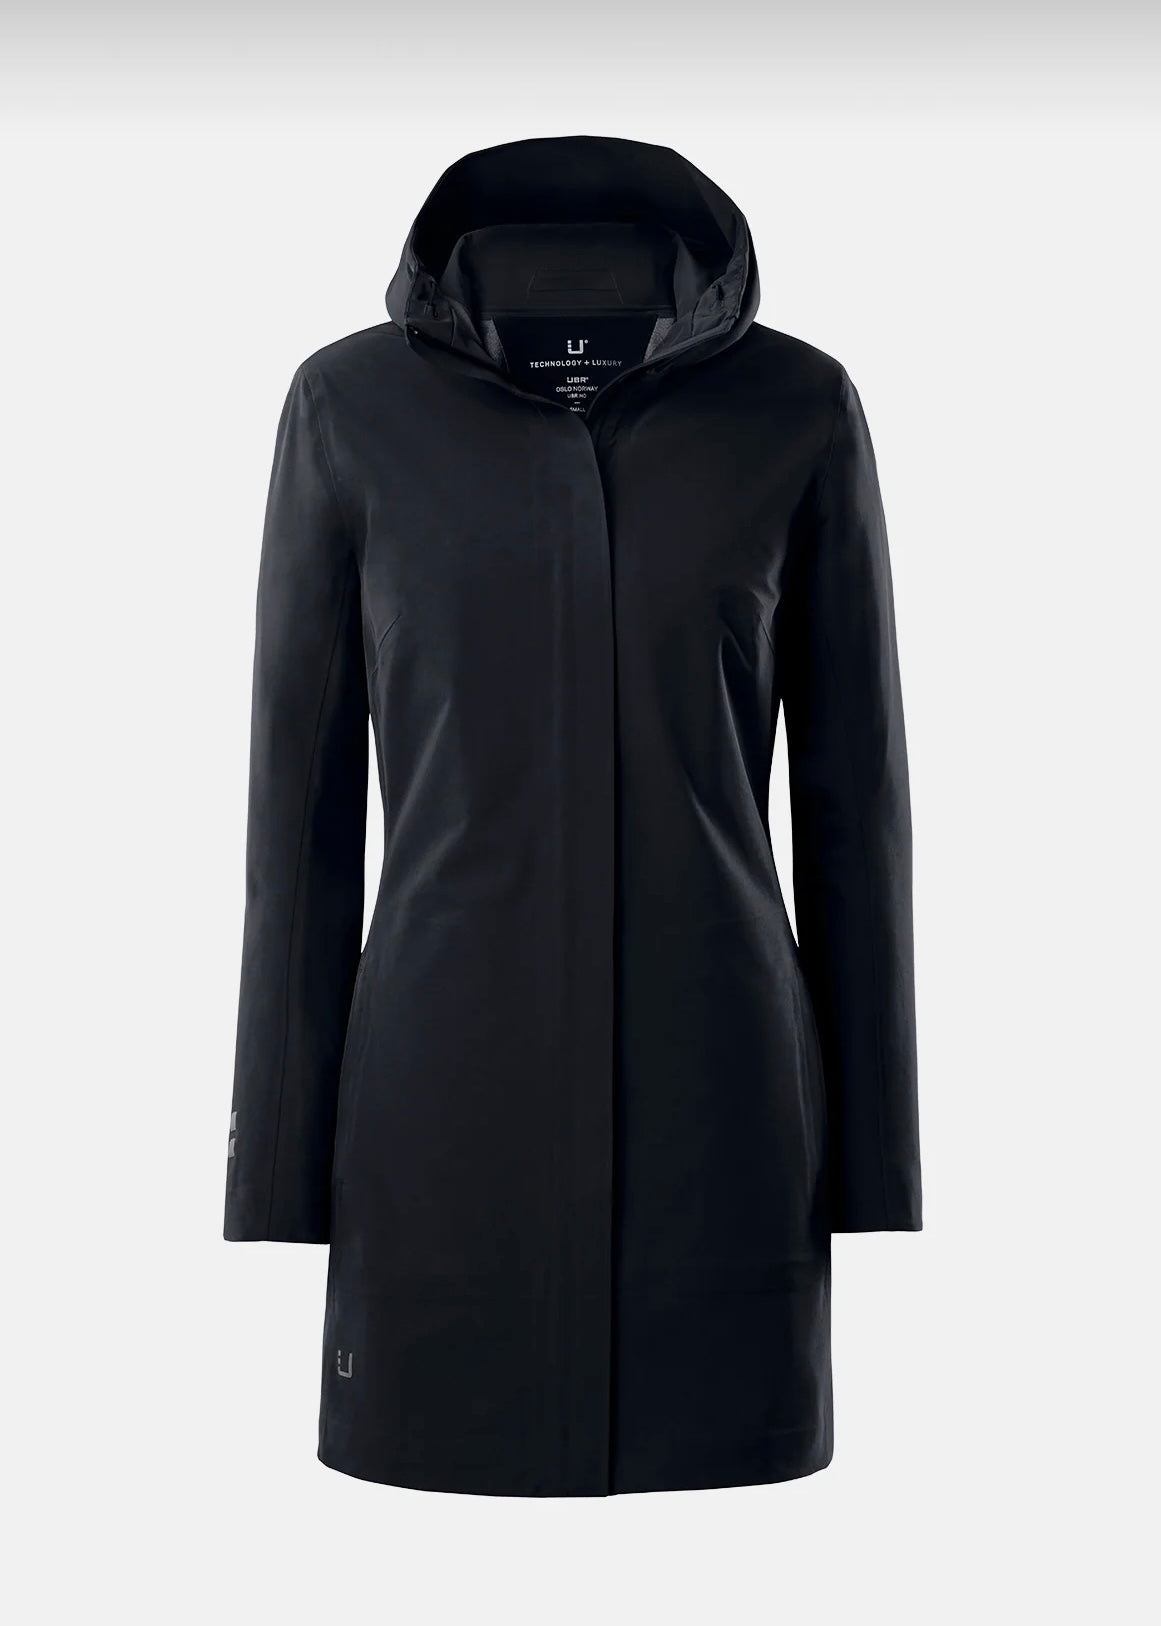 UBR Althena coat - Black